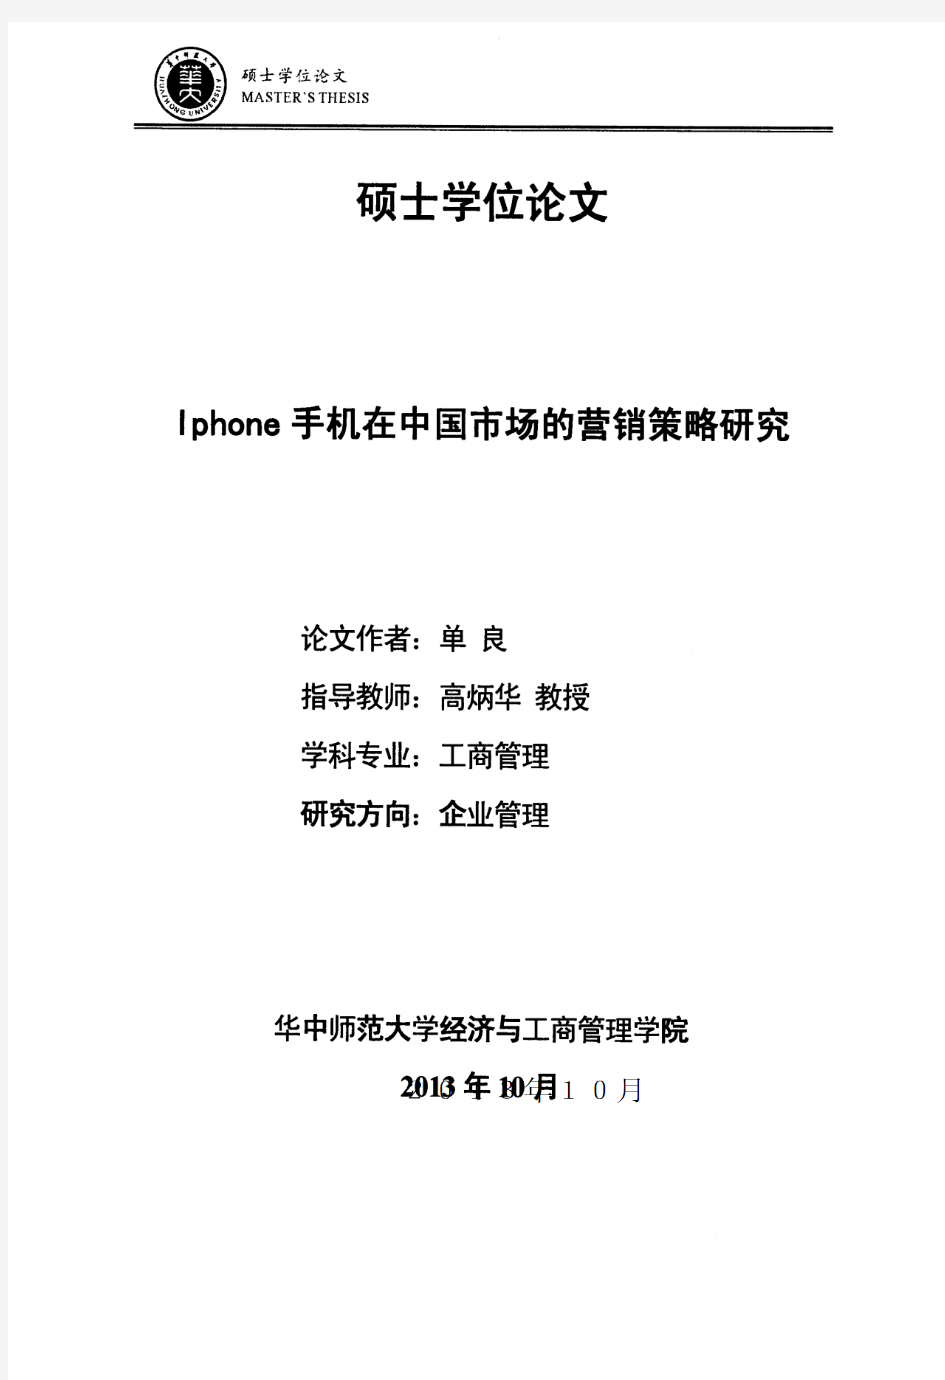 Iphone手机在中国市场的营销策略研究